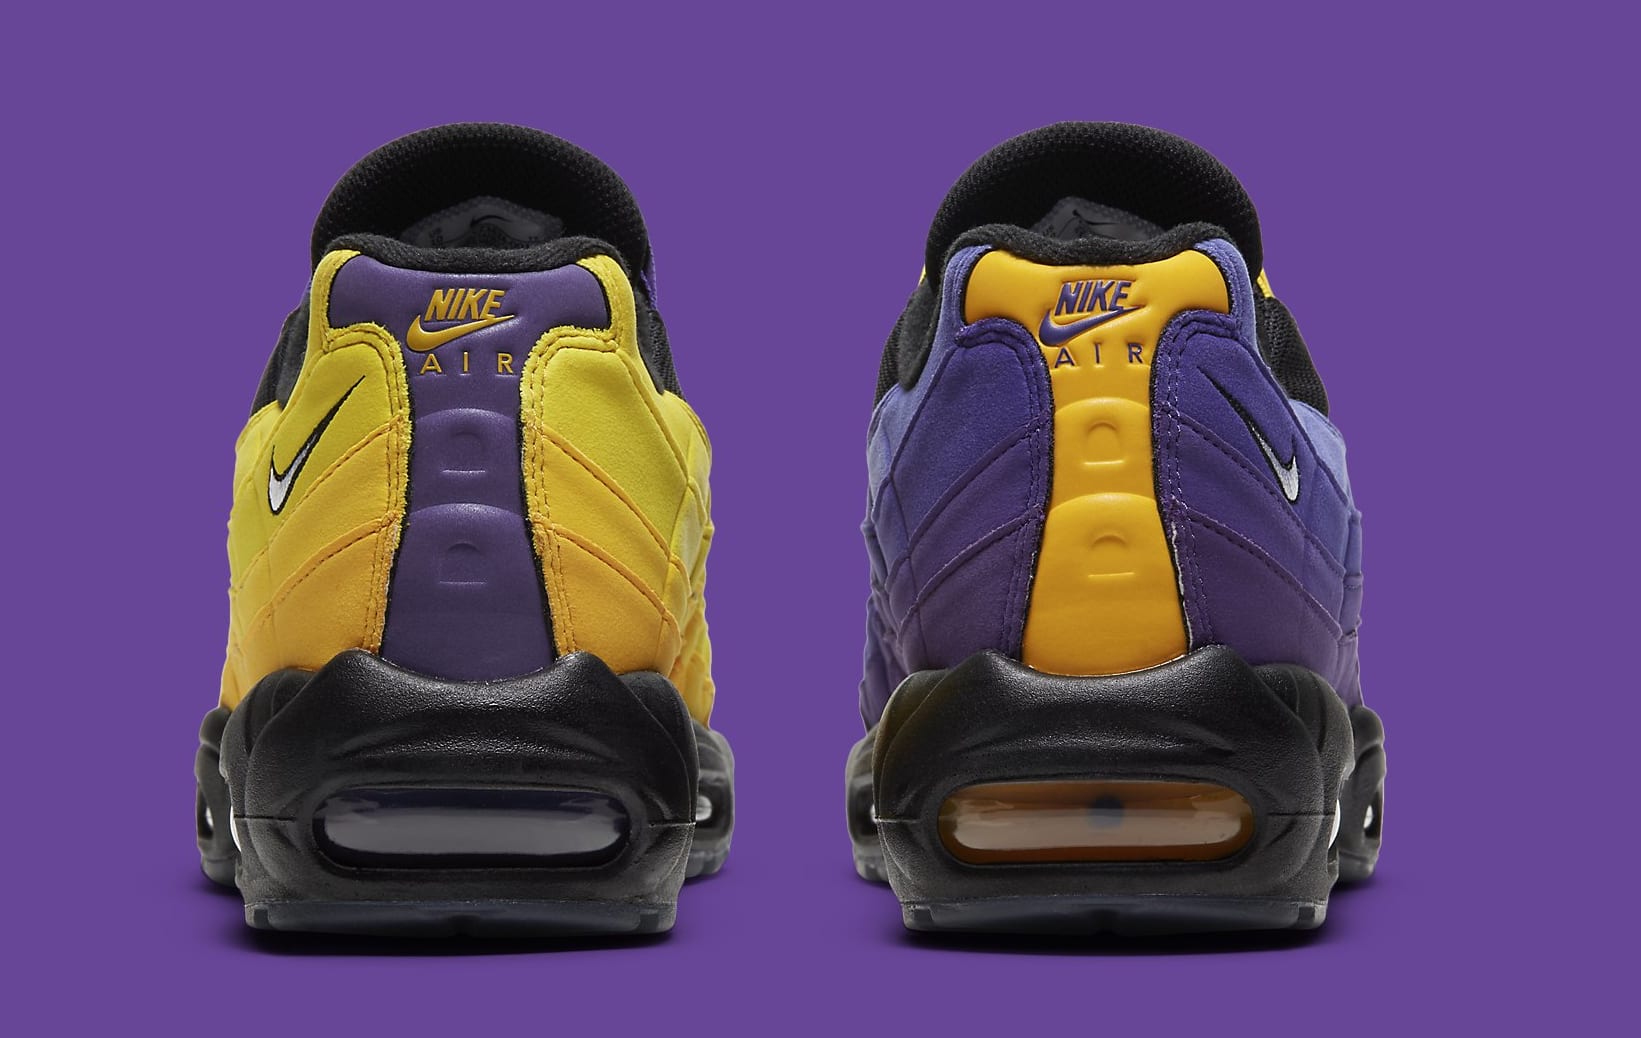 Nike Air Max 95 “LeBron” Officially Unveiled: Photos